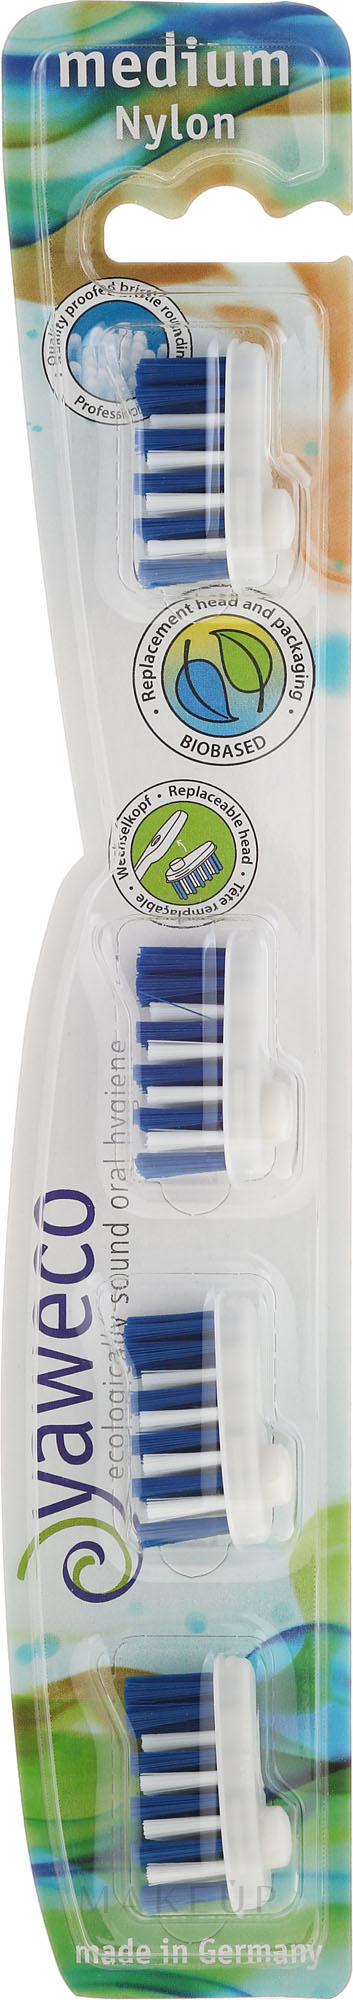 Austauschbare Zahnbürstenköpfe mittel 4 St. - Yaweco Toothbrush Heads Nylon Medium — Bild 4 St.